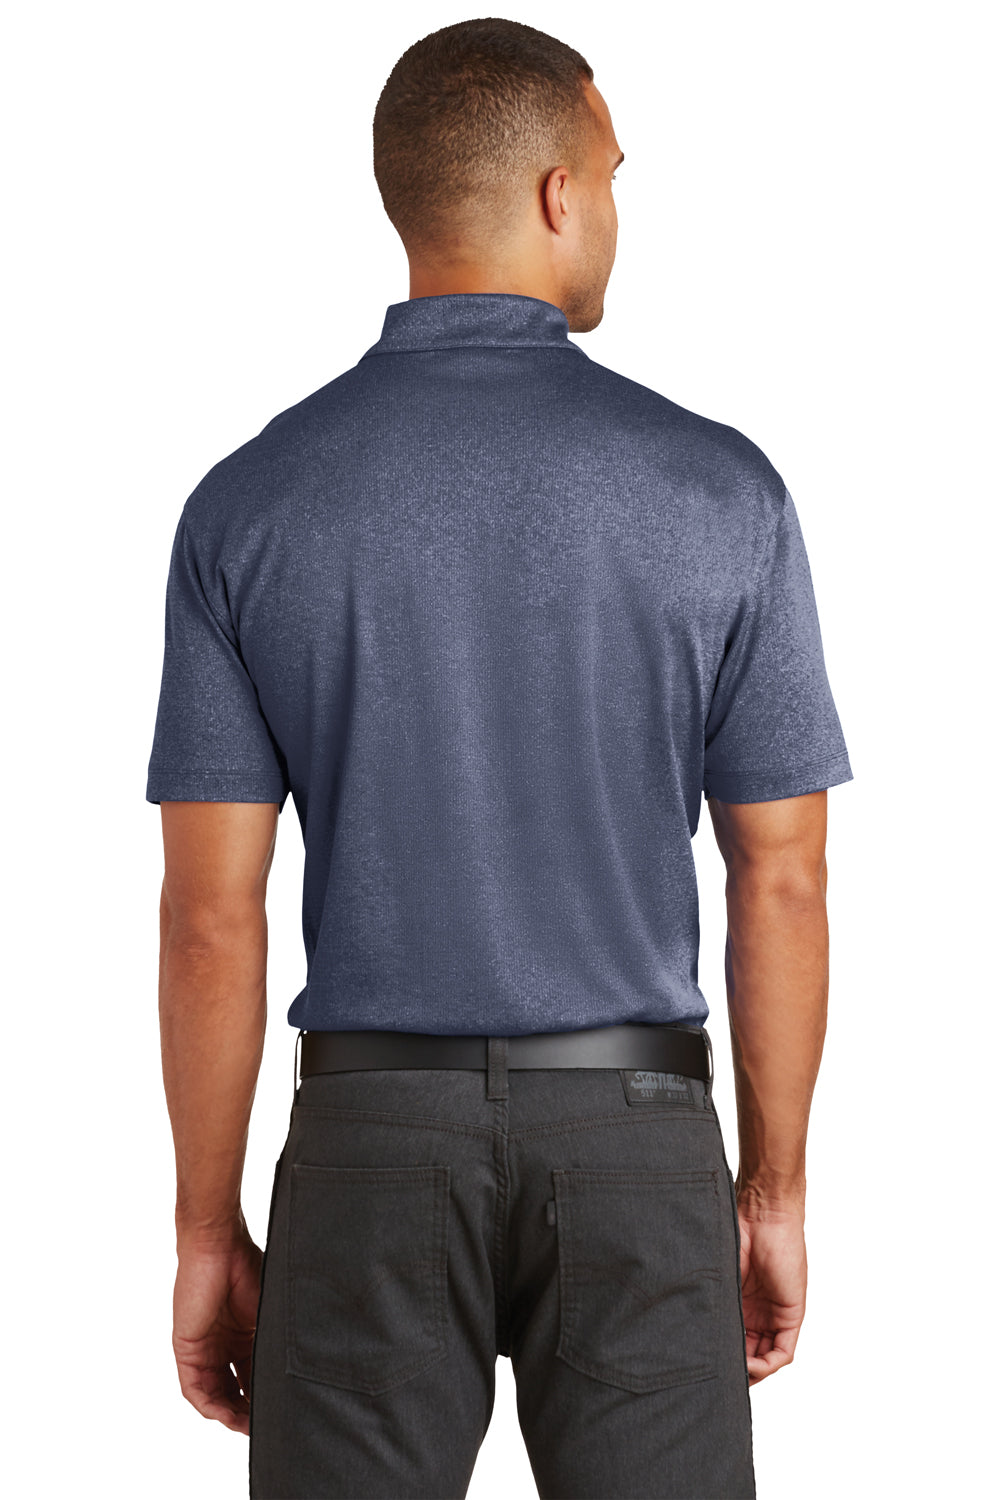 Port Authority K576 Mens Trace Moisture Wicking Short Sleeve Polo Shirt Heather Navy Blue Back